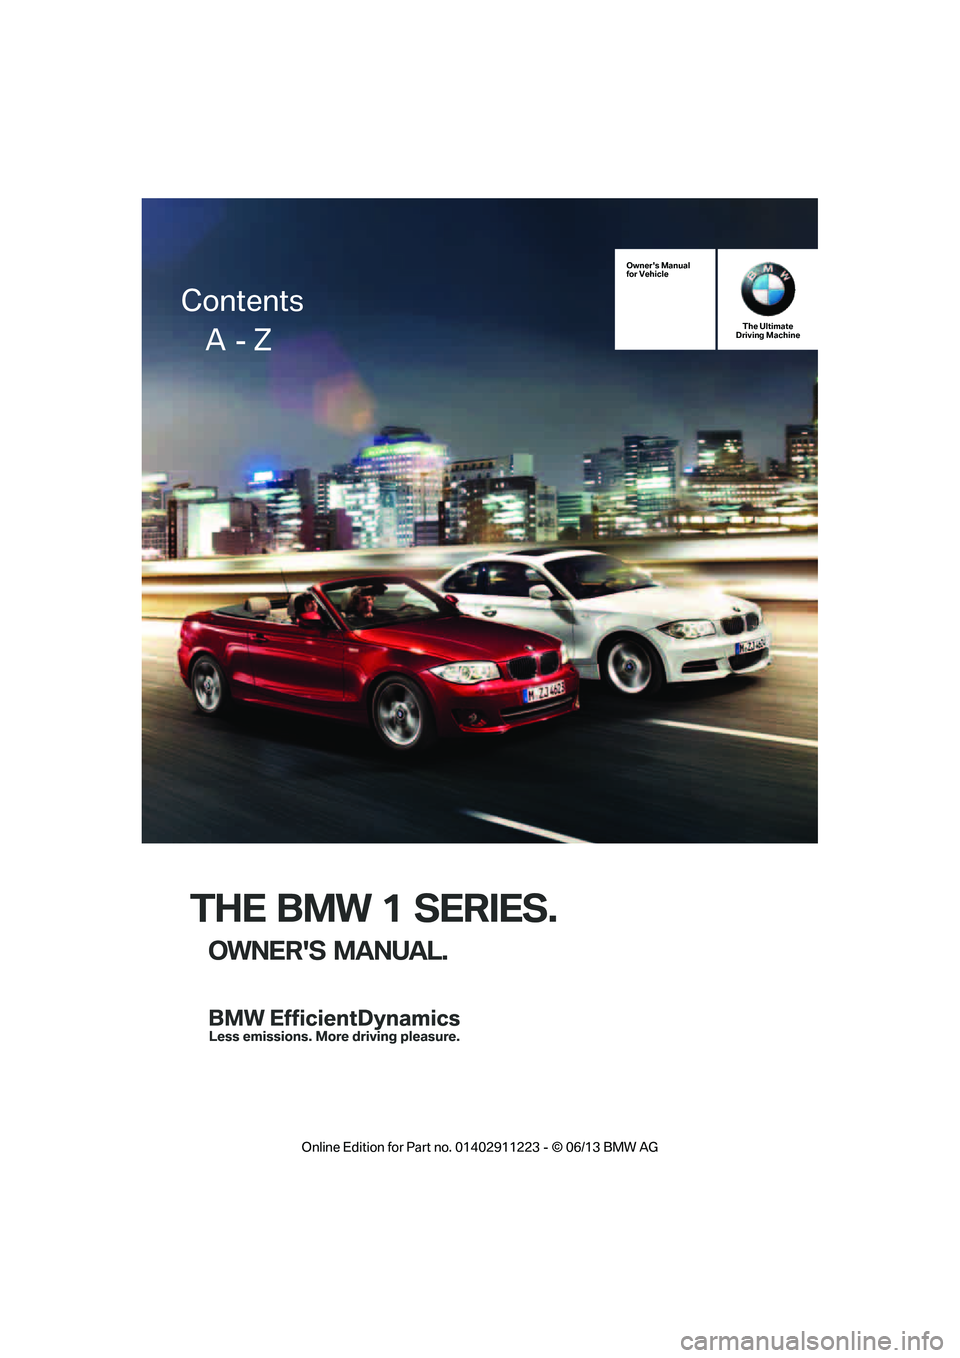 BMW 135I CONVERTIBLE 2013  Owners Manual THE BMW 1 SERIES.
OWNERS MANUAL.
Owners Manual
for VehicleThe Ultimate
Driving Machine
Contents
     A  - Z

�2�Q�O�L�Q�H �(�G�L�W�L�R�Q �I�R�U �3�D�U�W �Q�R� ����������� � �